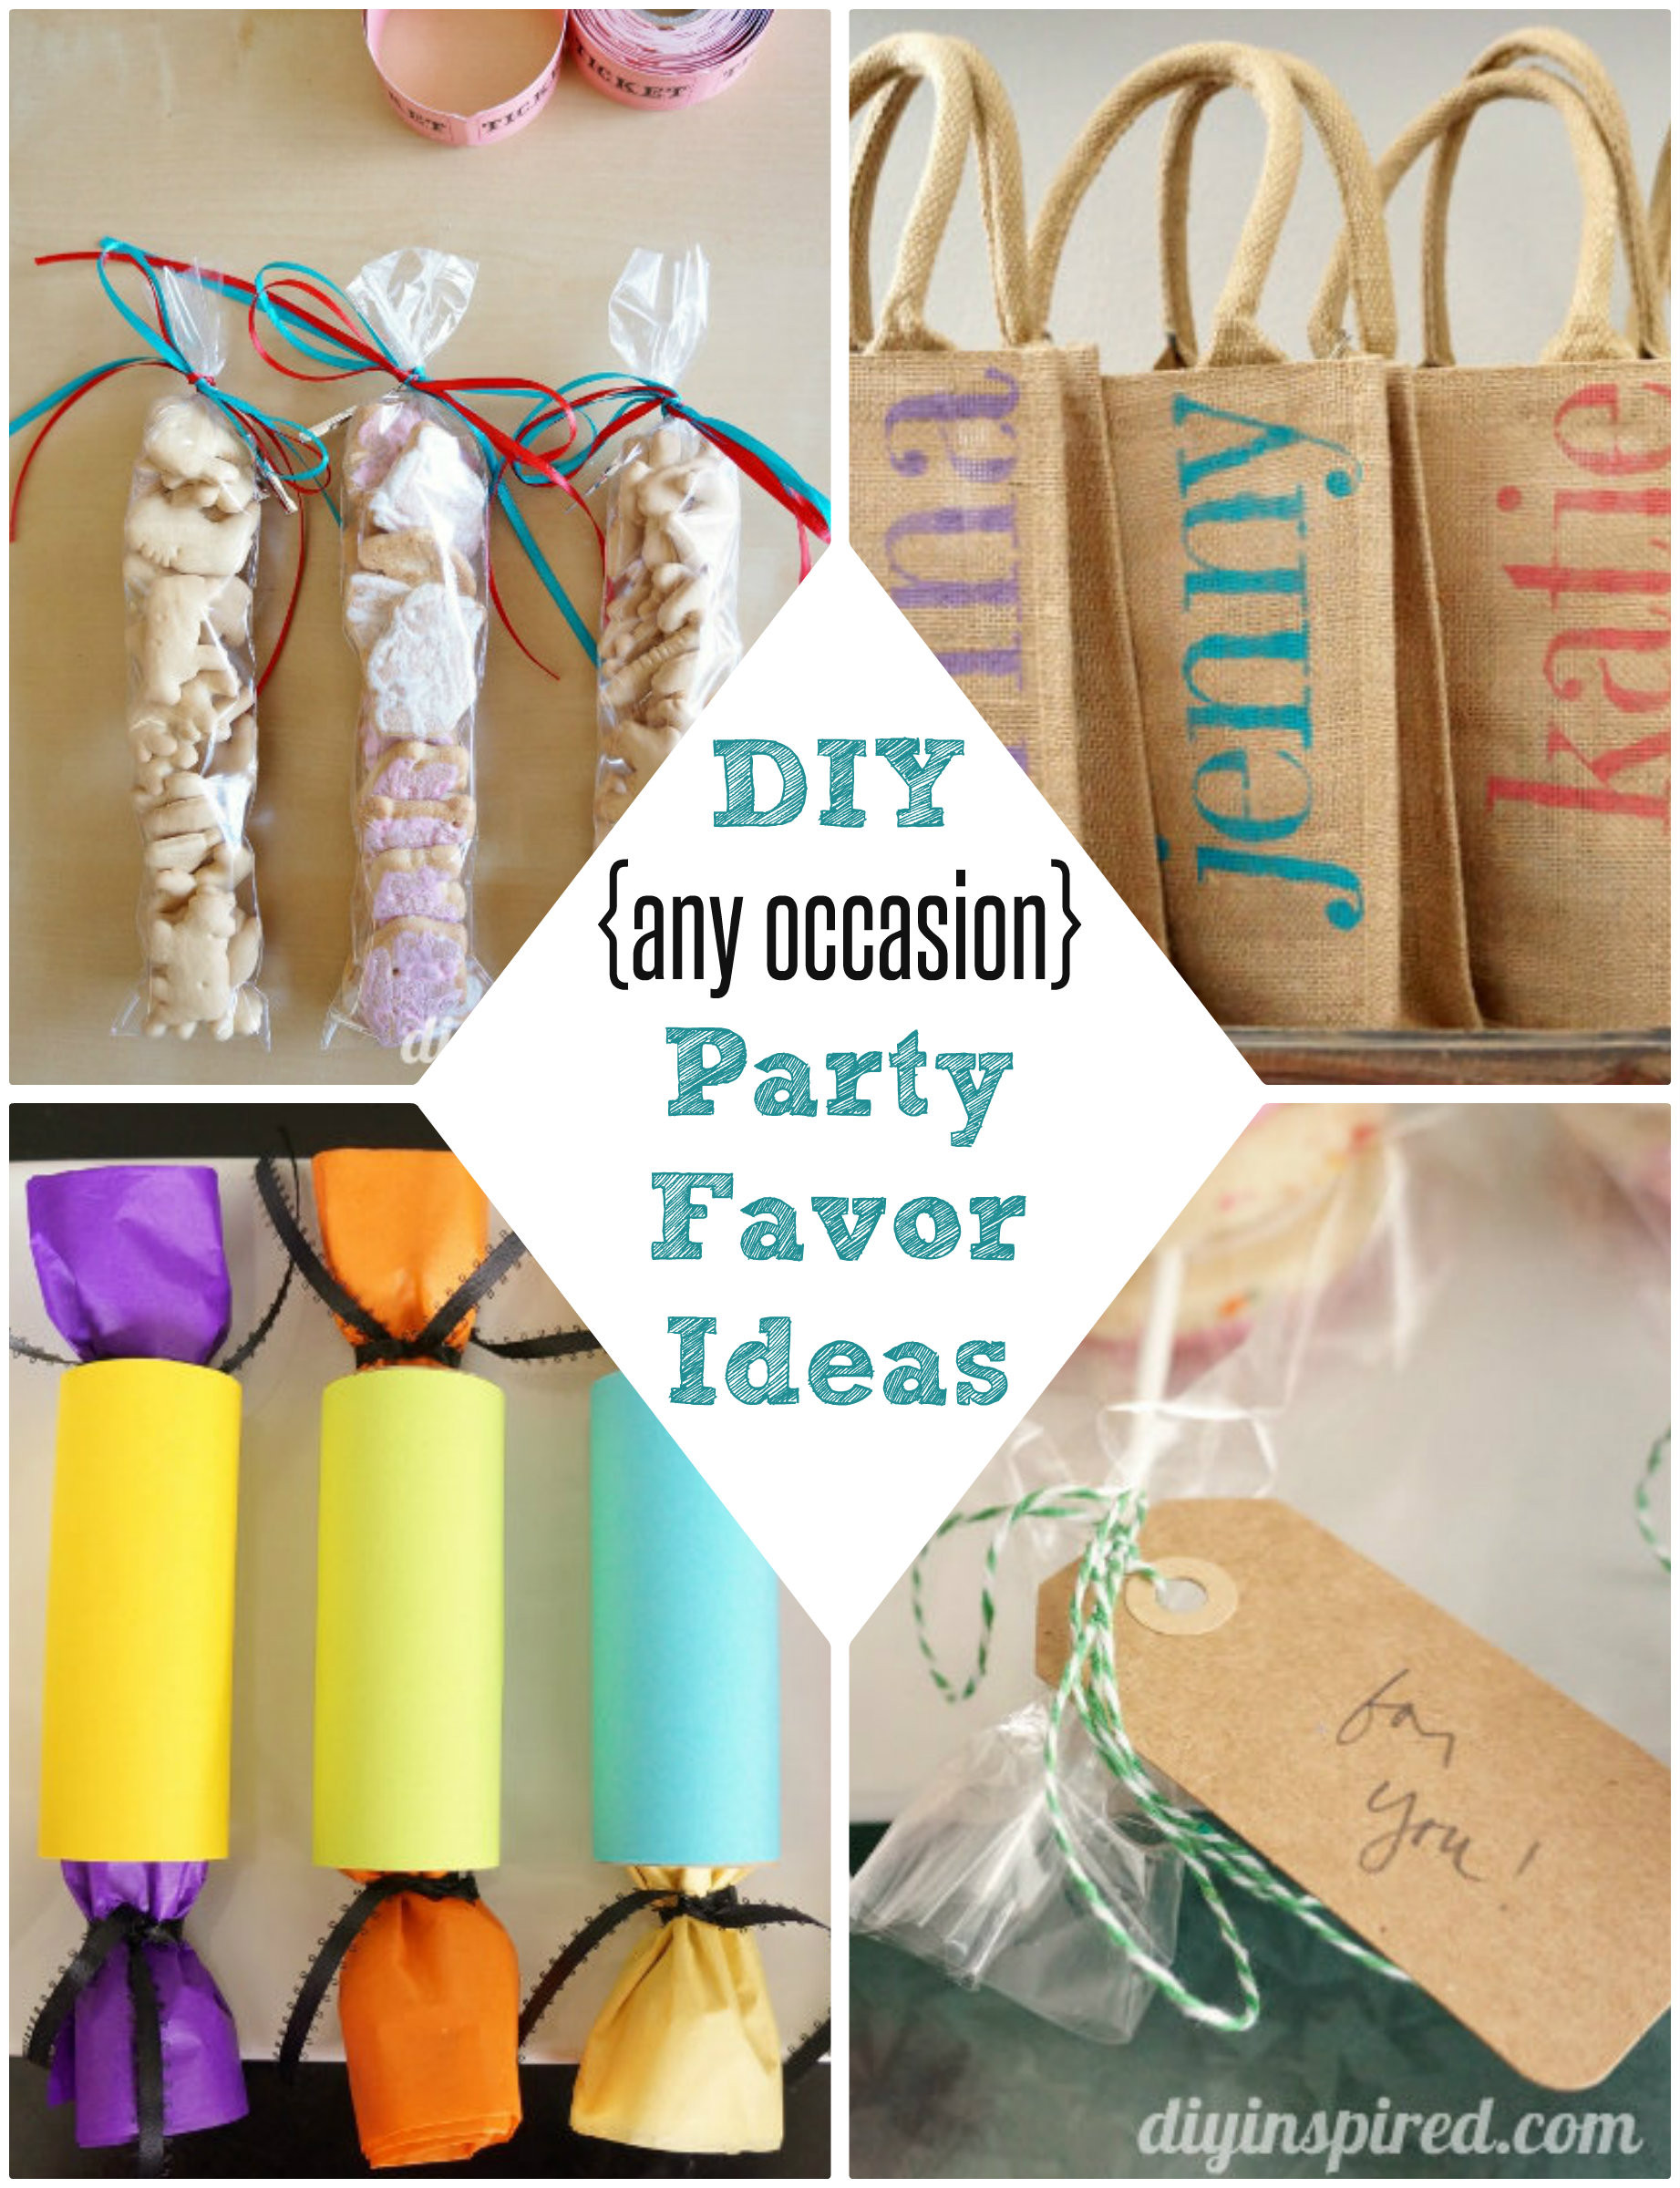 Homemade Christmas Party Favors Ideas
 DIY Party Favor Ideas DIY Inspired